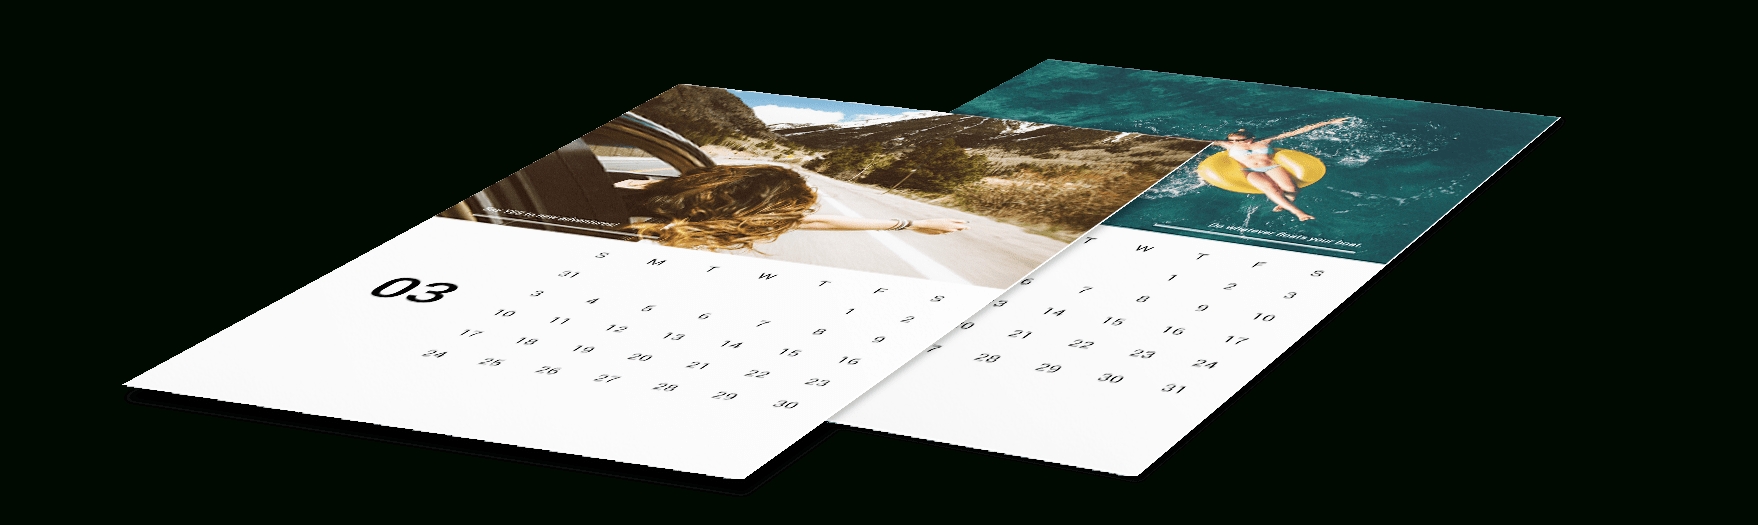 Calendar Quality | Photobook Philippines Calendar Printing Services Philippines